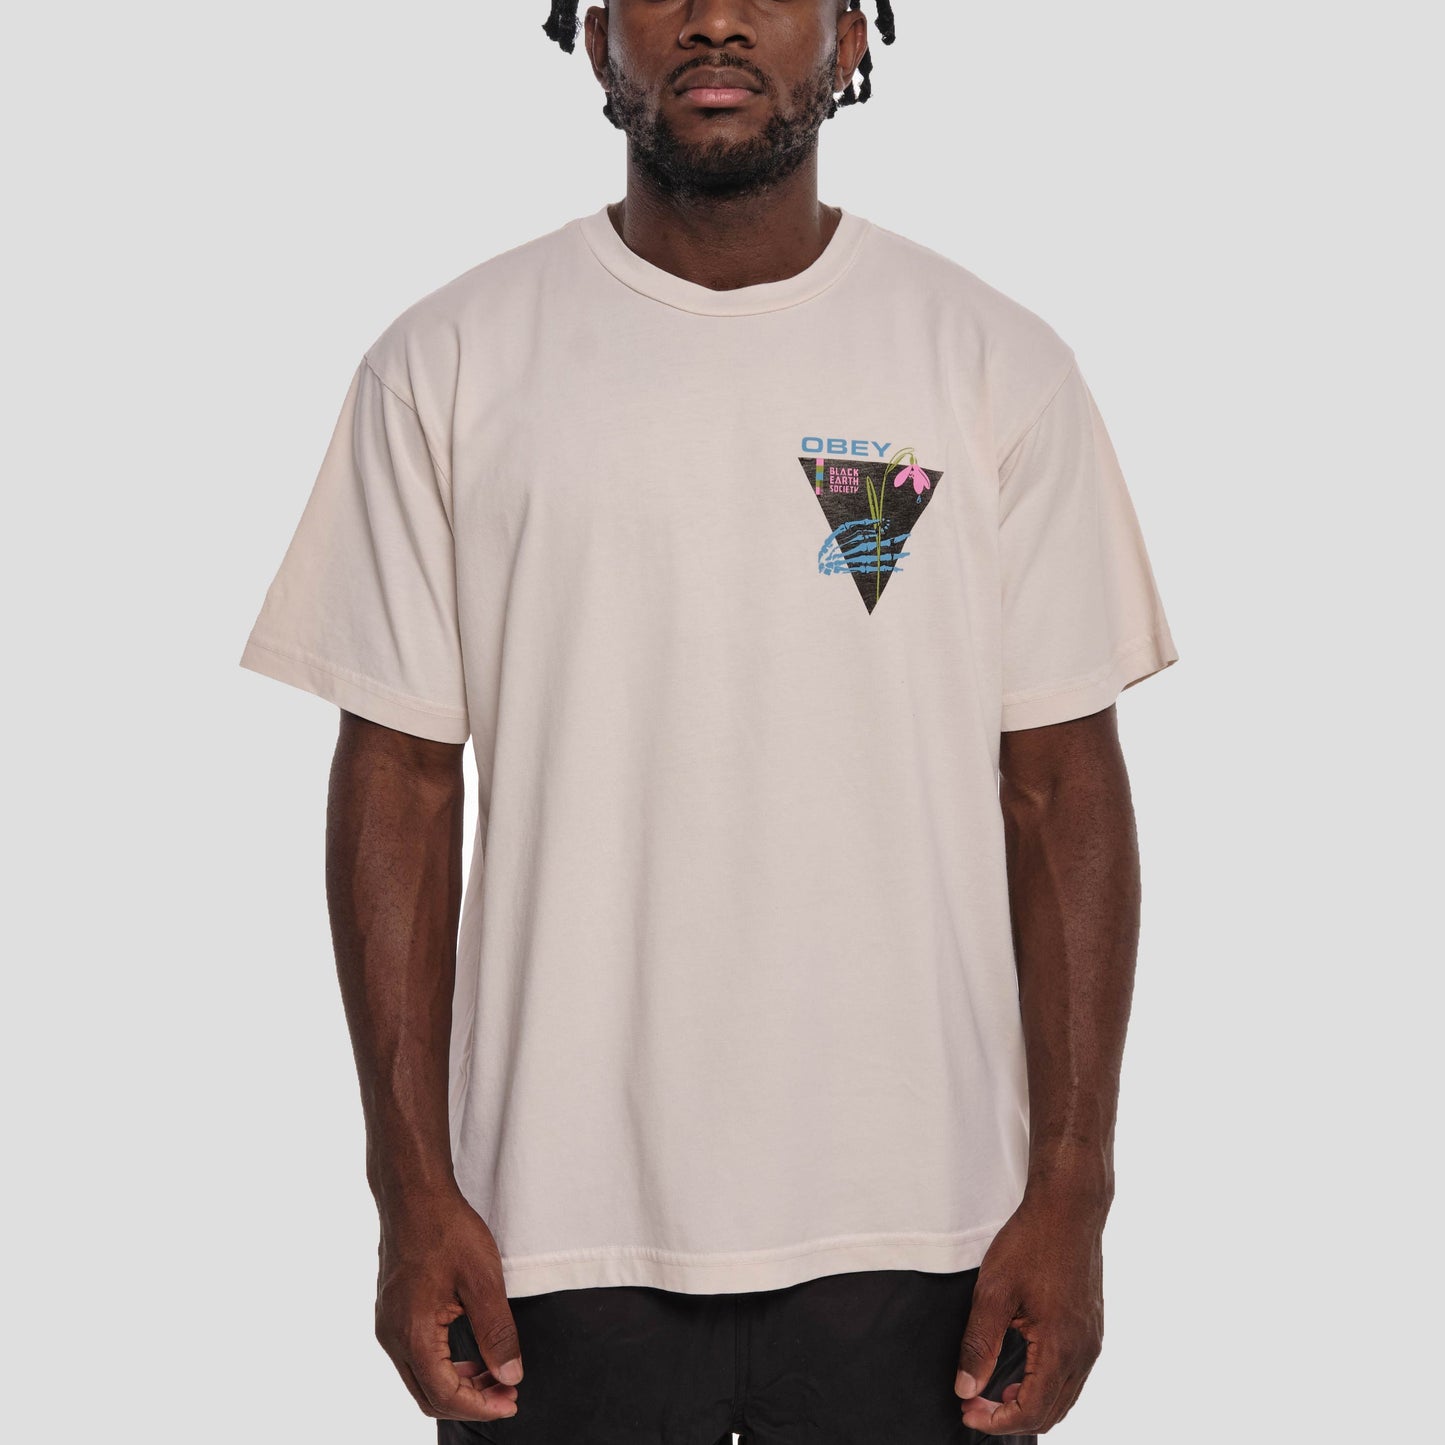 Obey Camiseta Black Earth Society - A126600